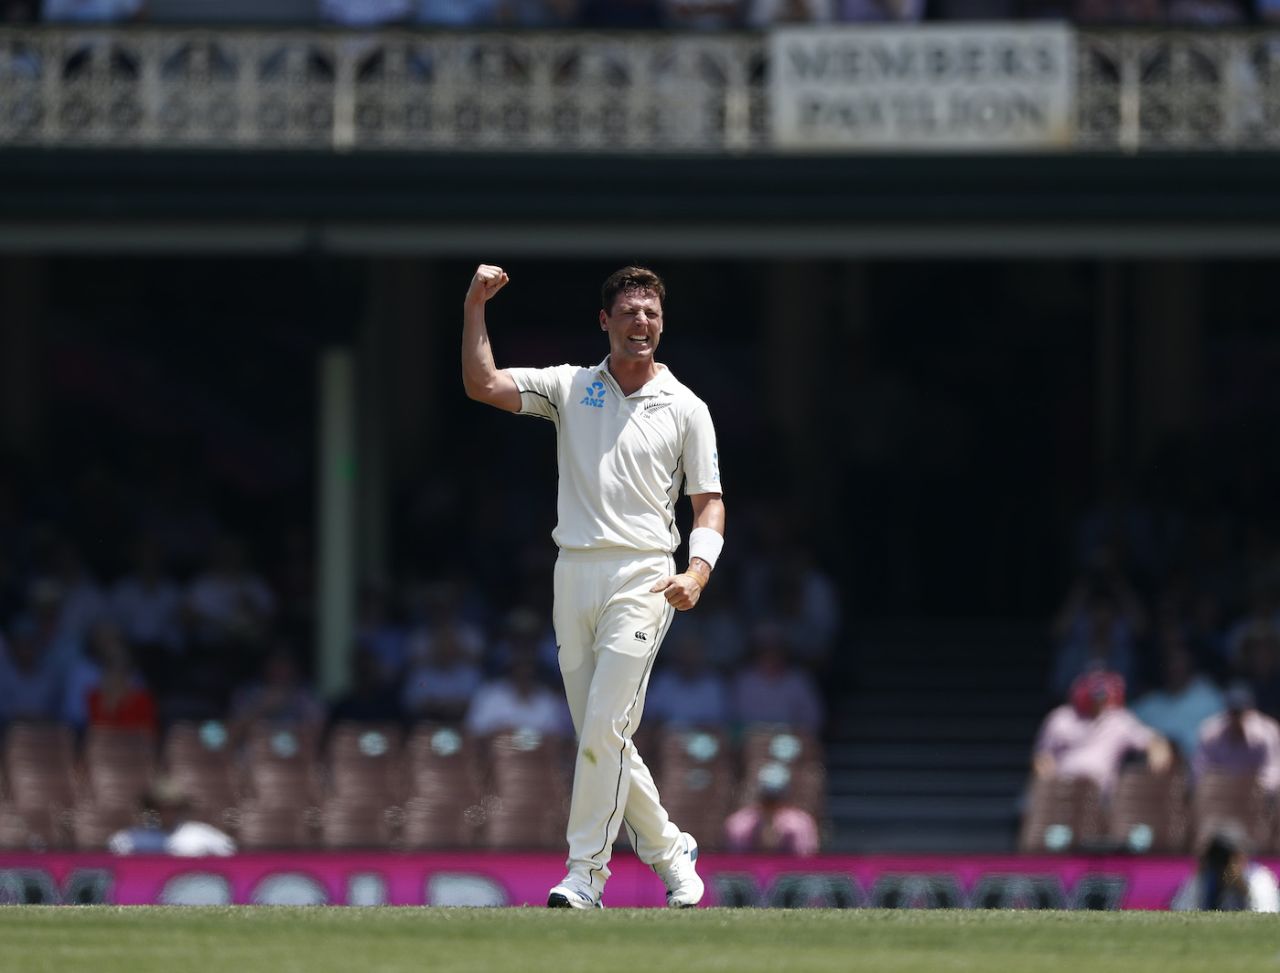 Matt Henry celebrates a wicket, Australia v New Zealand, 3rd Test, Sydney, 2nd day, January 4, 2020